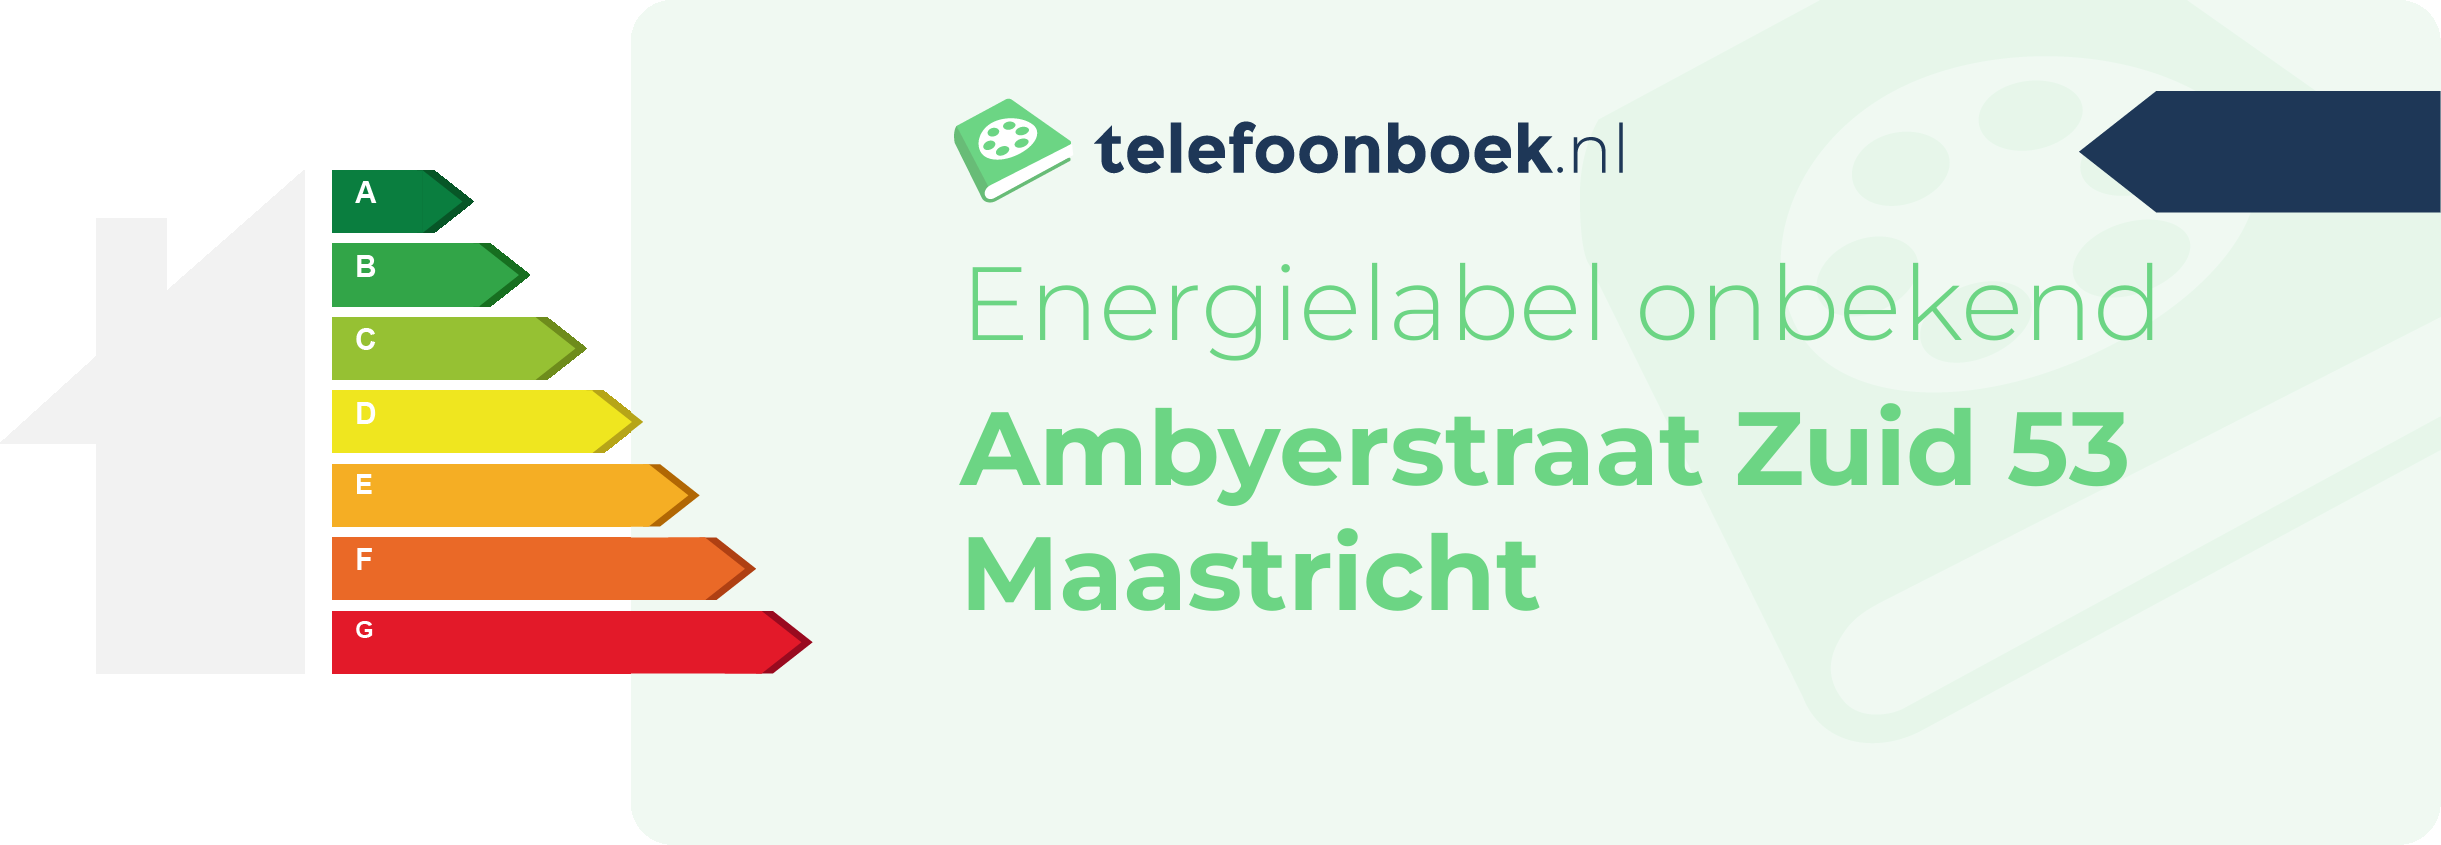 Energielabel Ambyerstraat Zuid 53 Maastricht